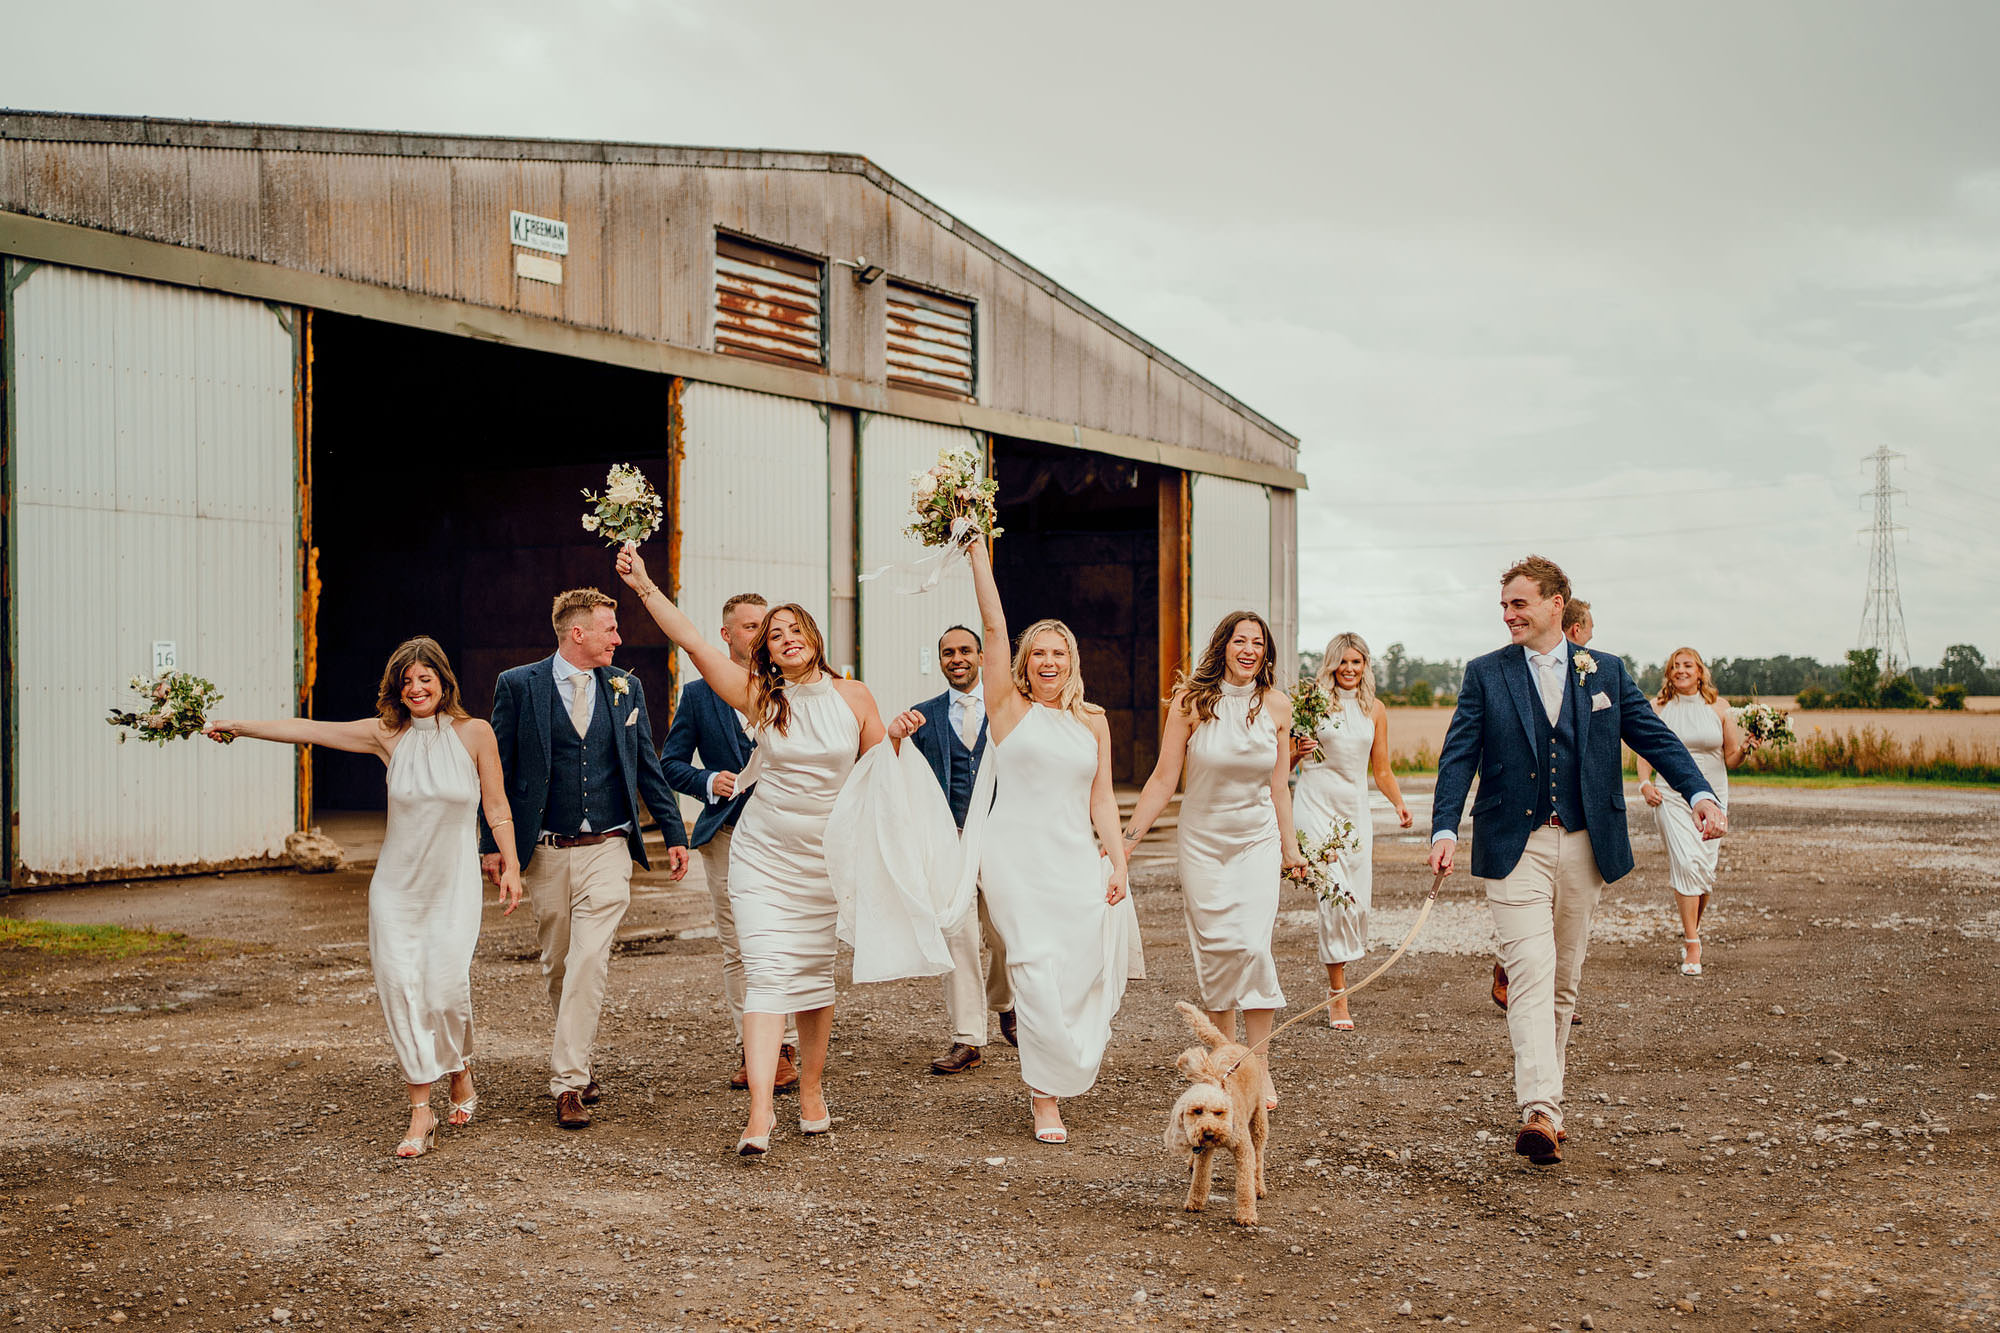 White Sykes alternative farm barn wedding venues 